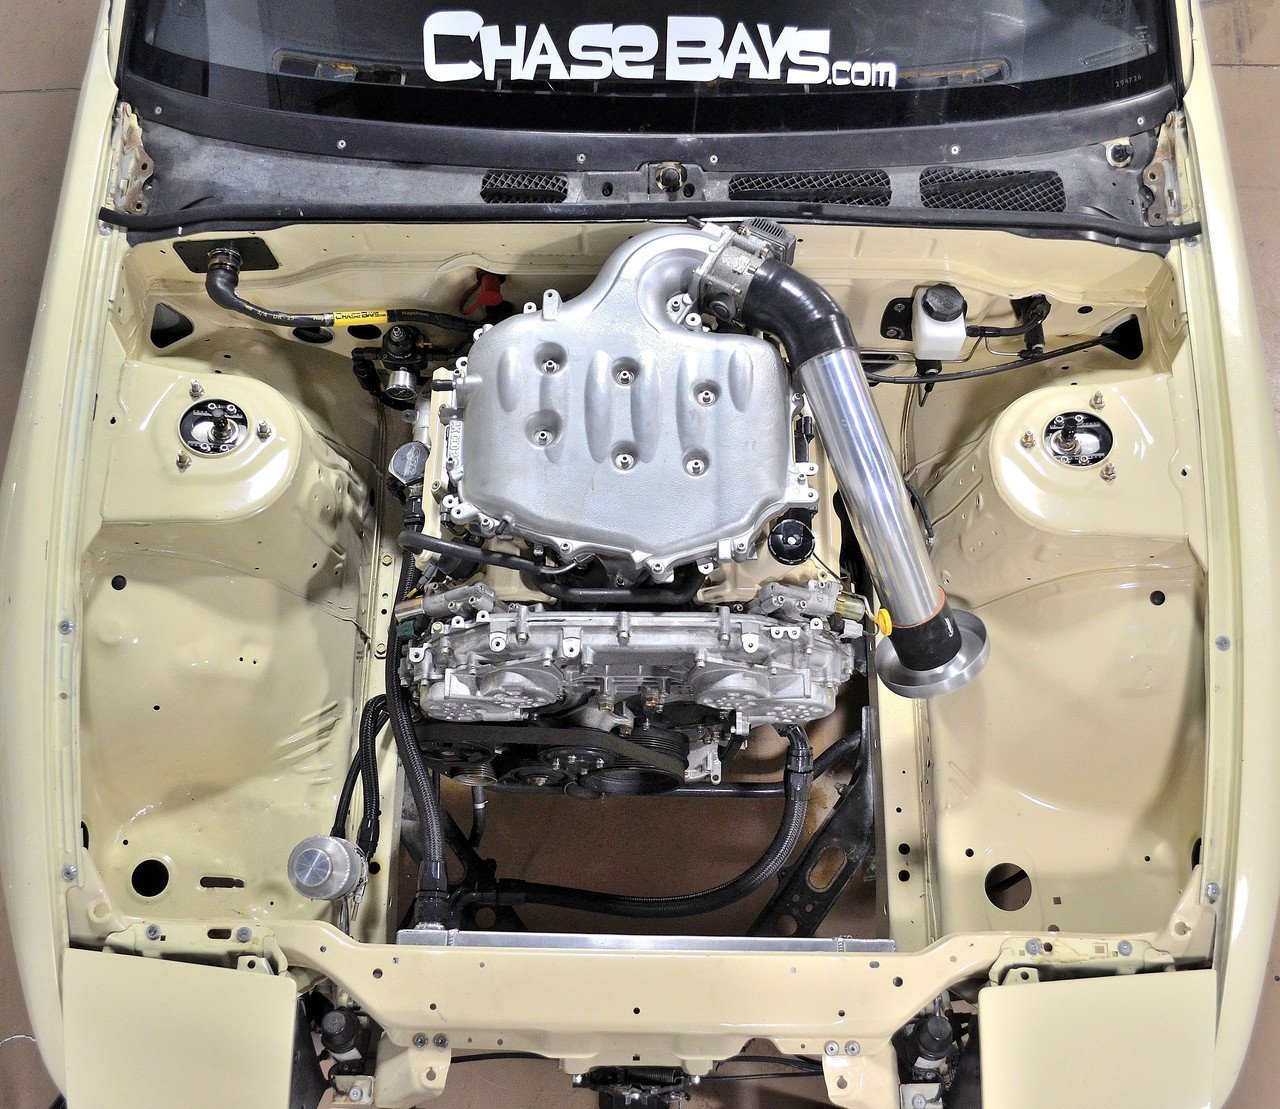 CHASE BAYS Nissan Silvia S13 S14 S15 Kraftstoff Leitung Kit mit Nissan VQ35DE Swap - PARTS33 GmbH